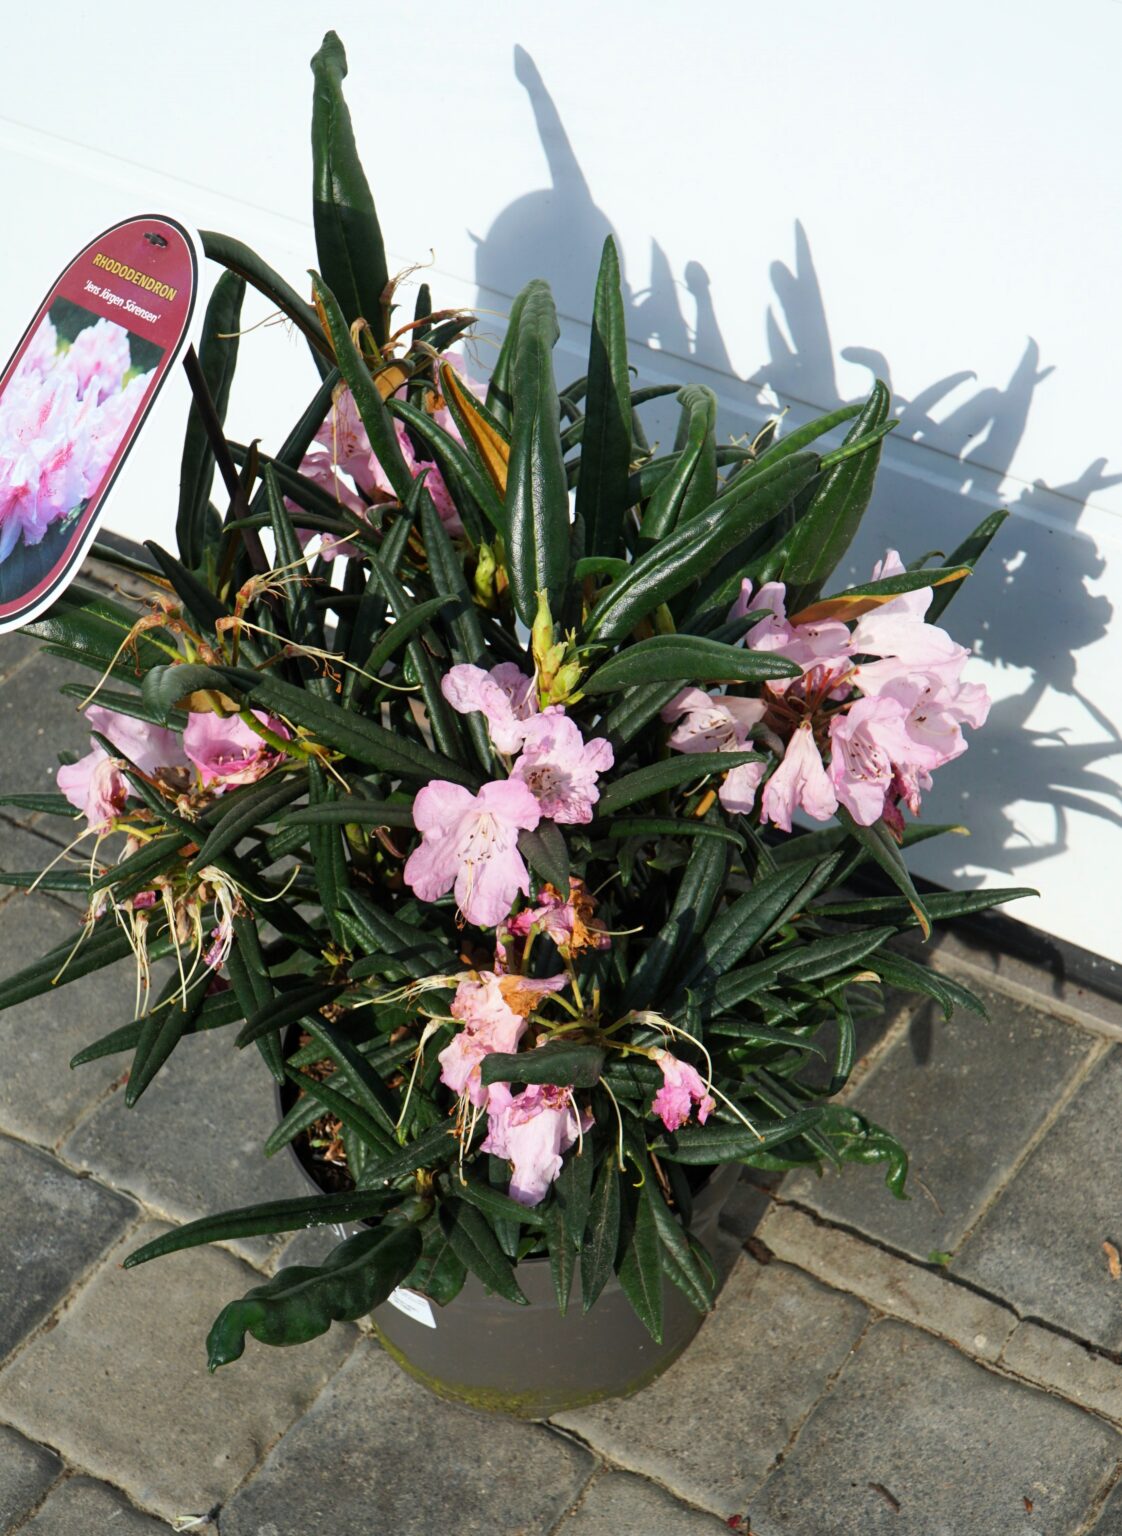 RÓŻANECZNIK JENS JÖRGEN SÖRENSEN Rhododendron makinoi